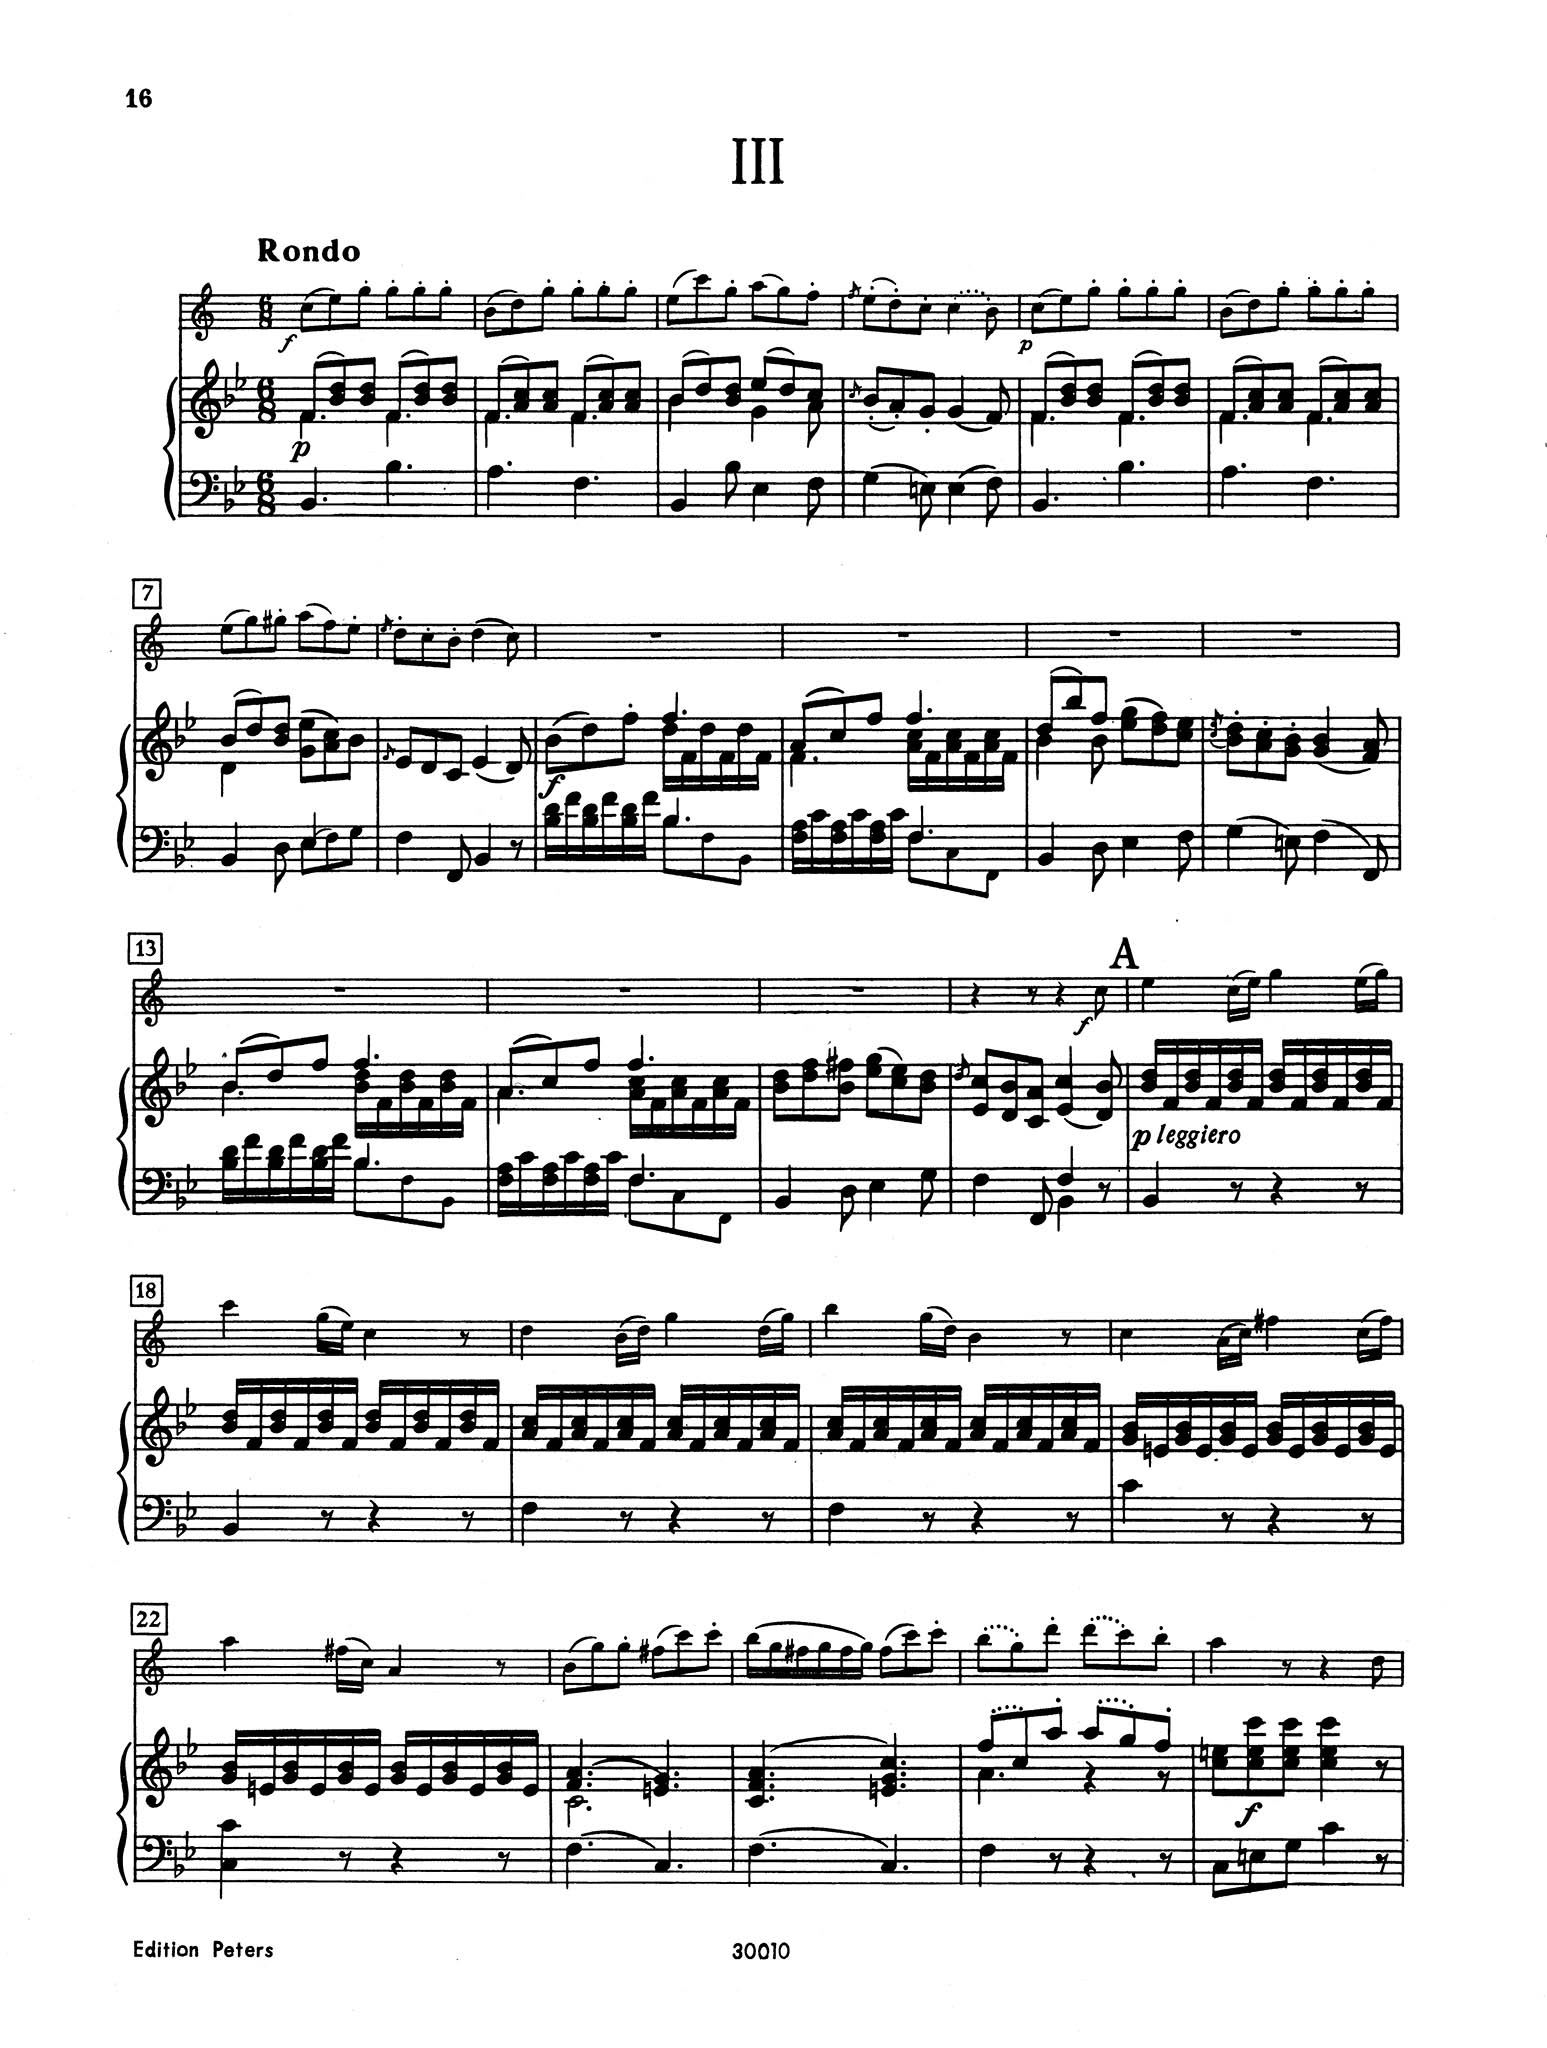 Clarinet Concerto No. 7 (Kaiser) in B-flat Major - Movement 3